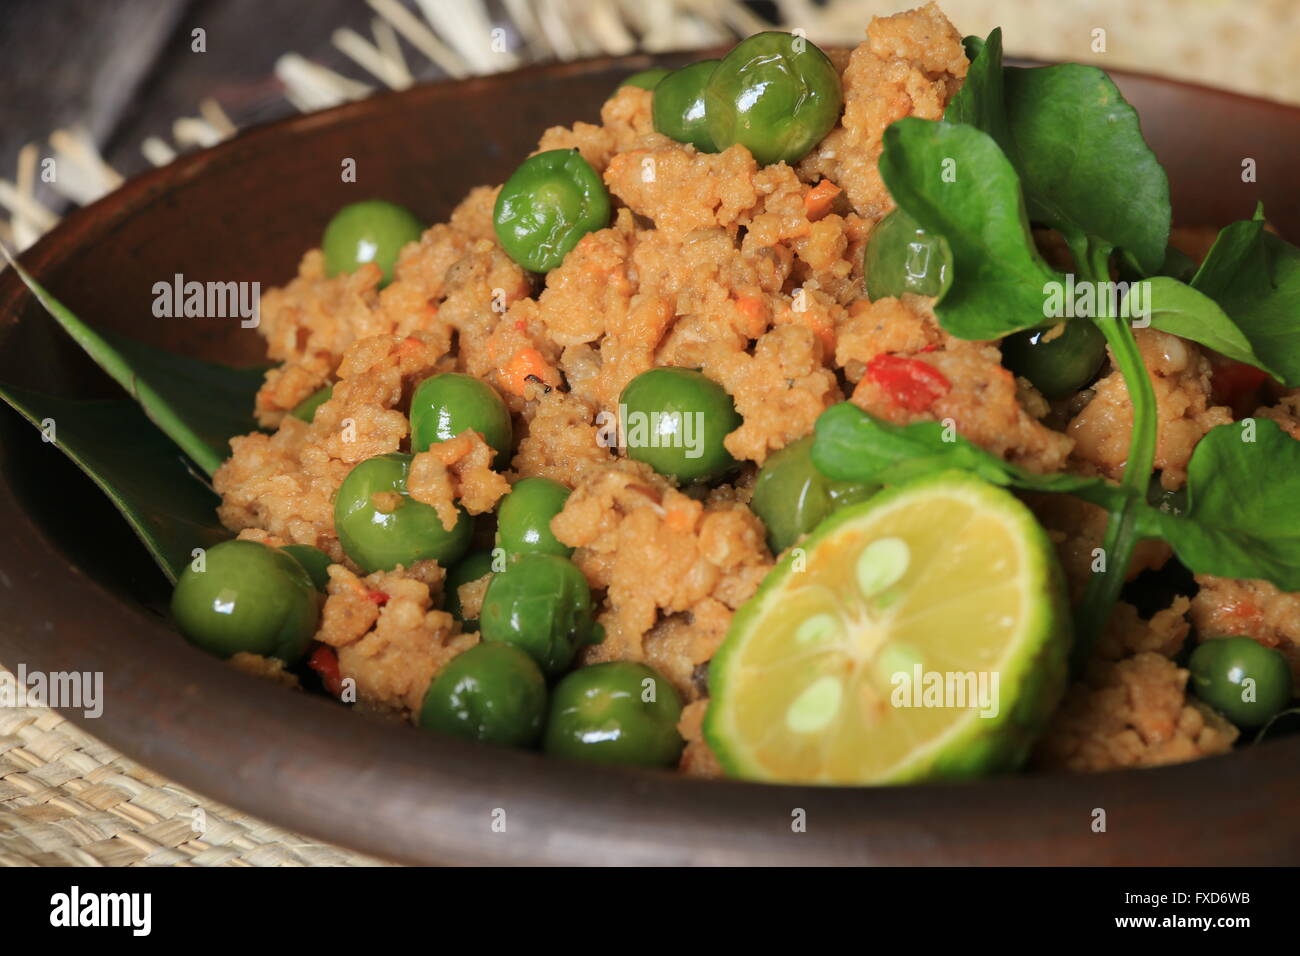 Popular Sundanese vegetarian dish of sauteed oncom and leunca, served on traditional earthenware plate. Stock Photo